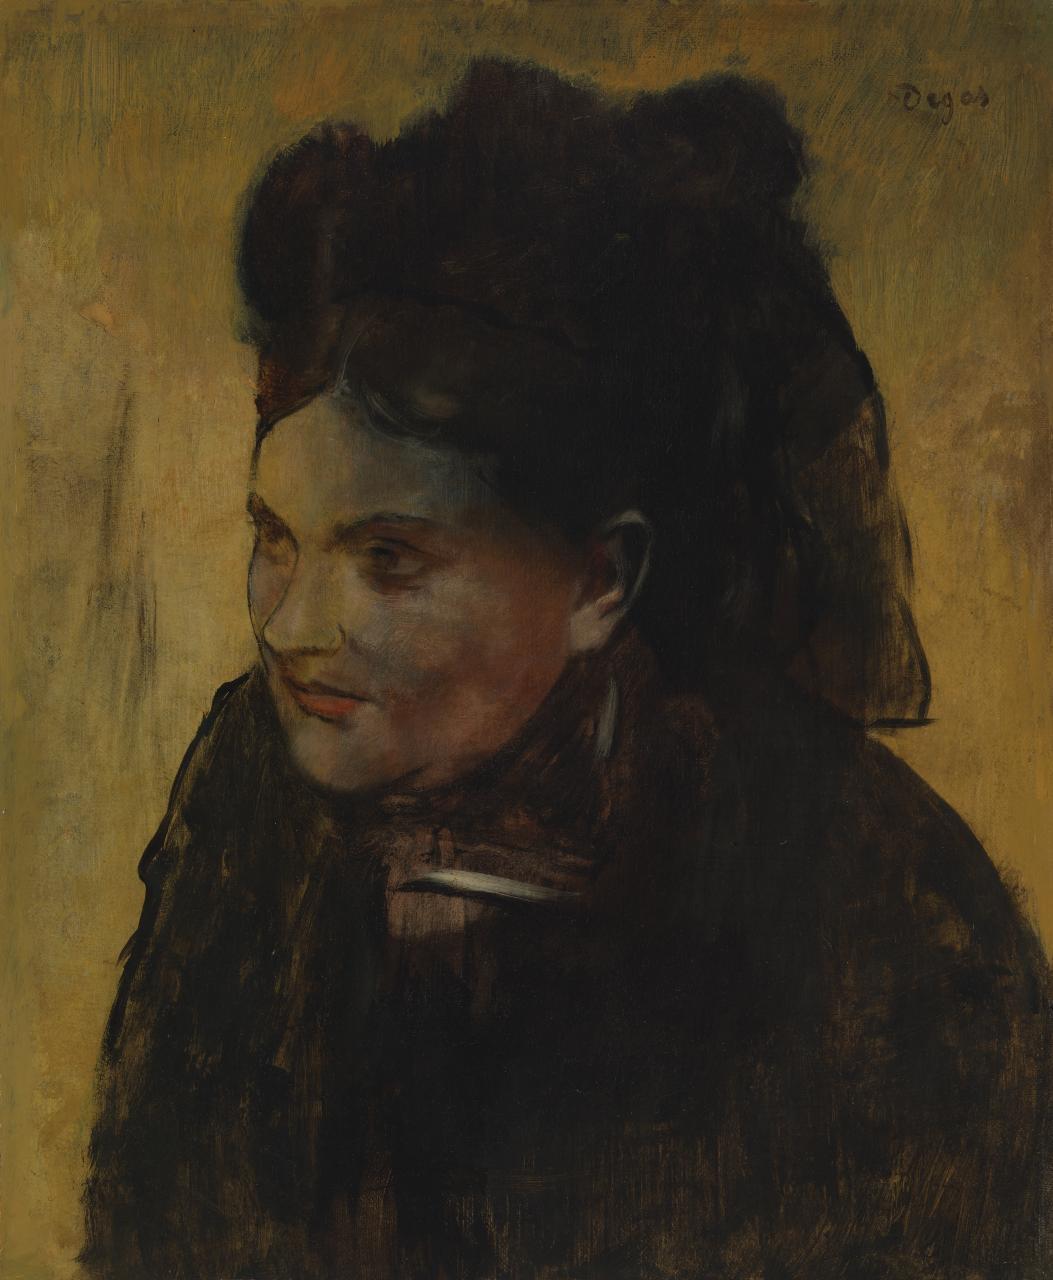 Perempuan Lain dalam Lukisan Degas